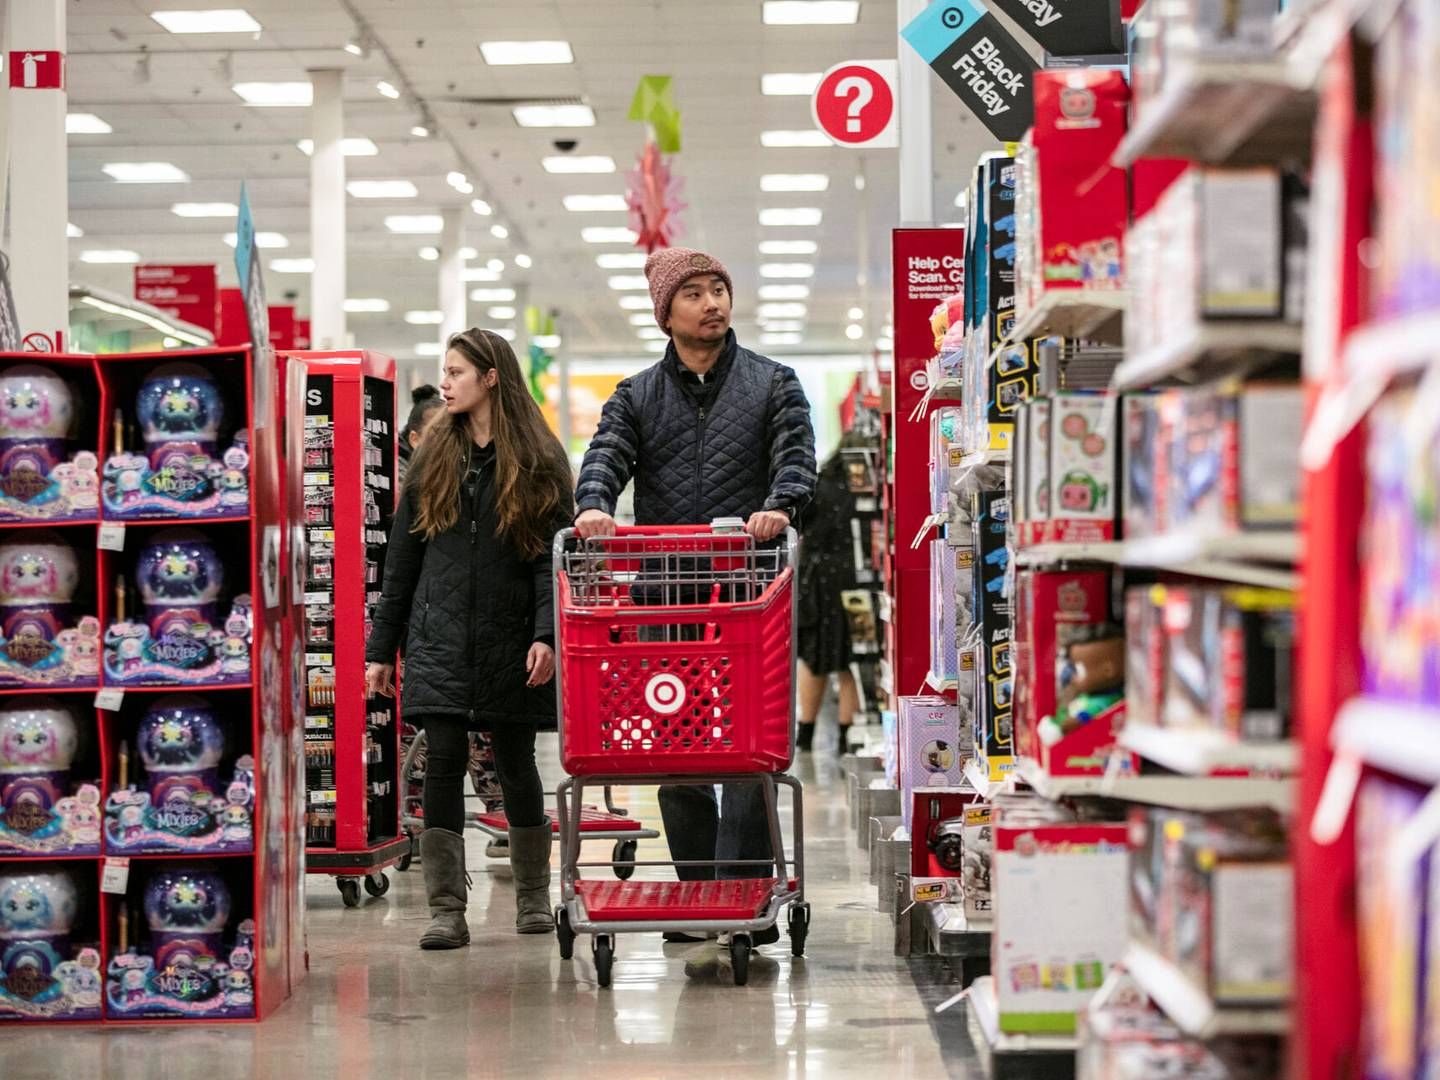 Target har samlet mere end 400.000 ansatte. | Foto: Jim Vondruska/Reuters/Ritzau Scanpix